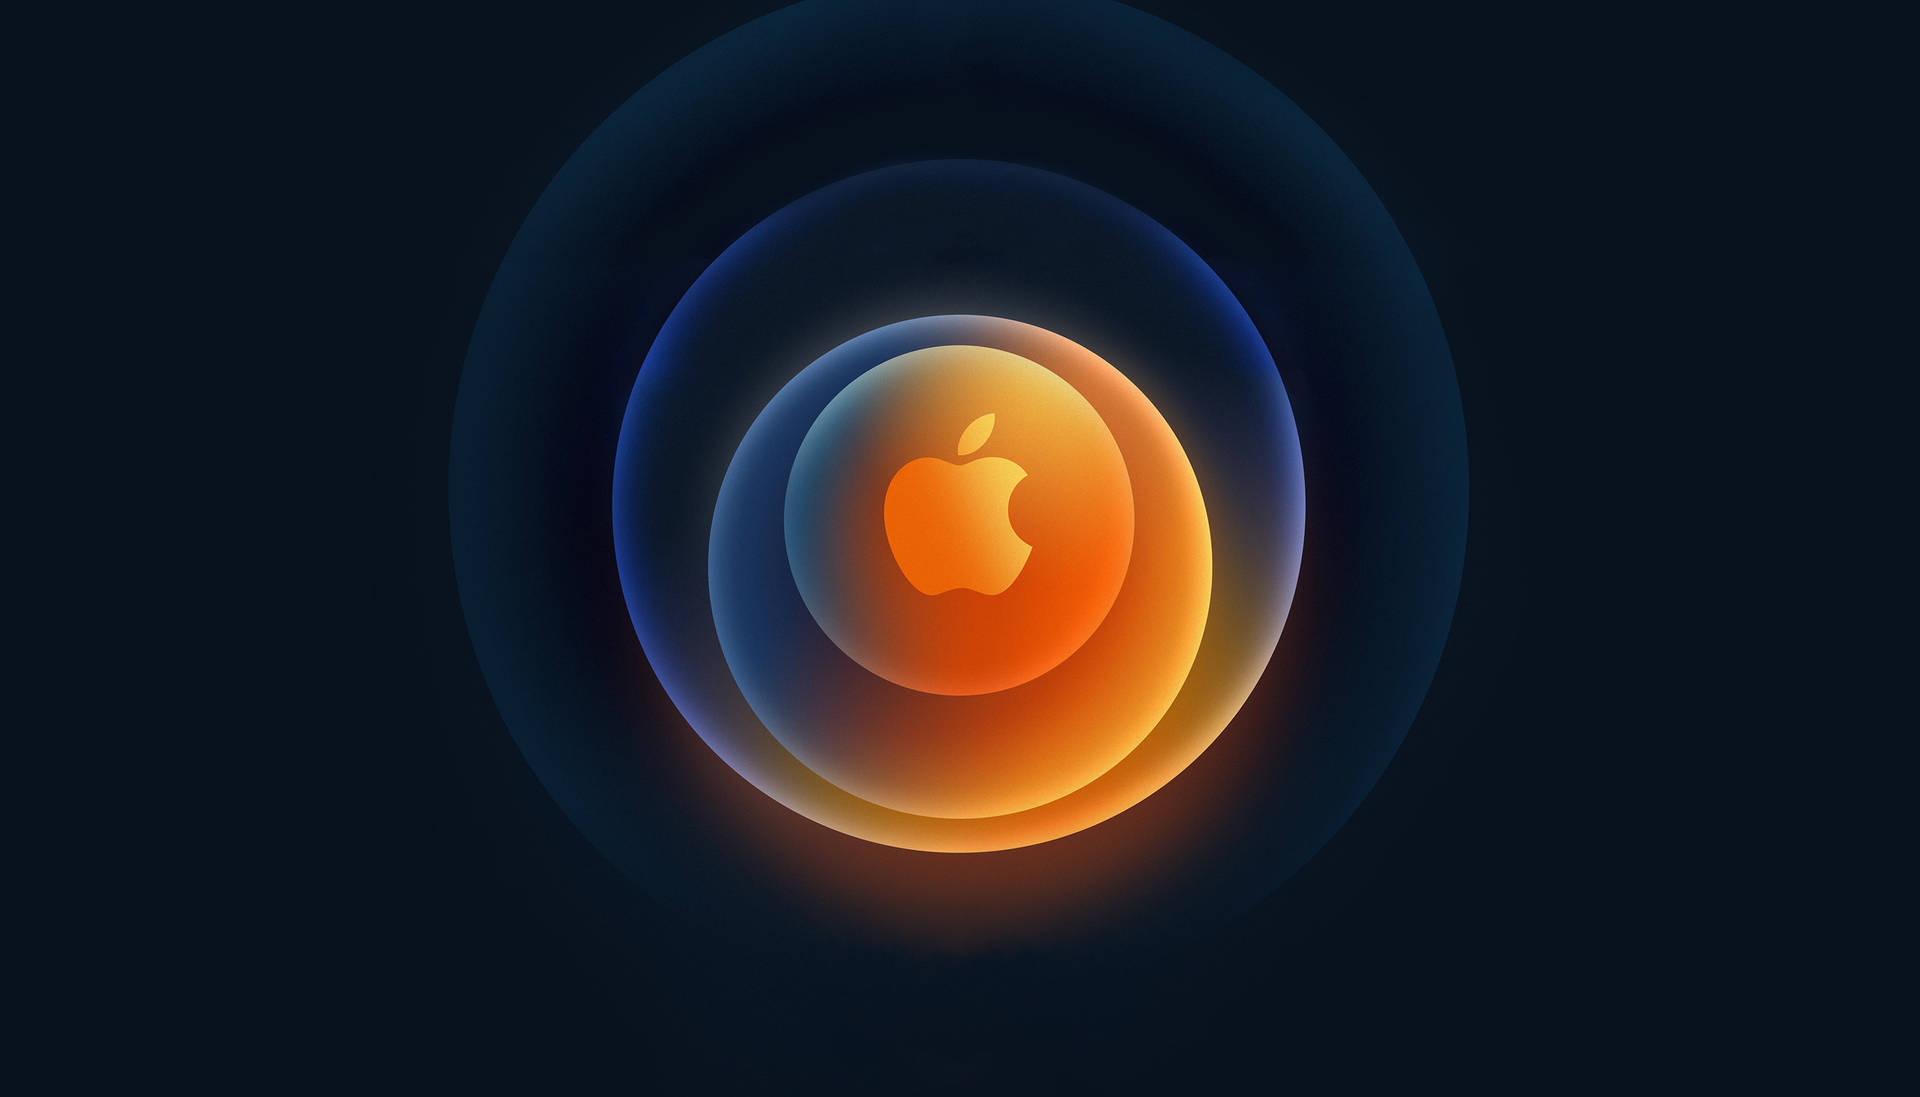 Caption: Full Hd Stunning Apple Circular Design Background